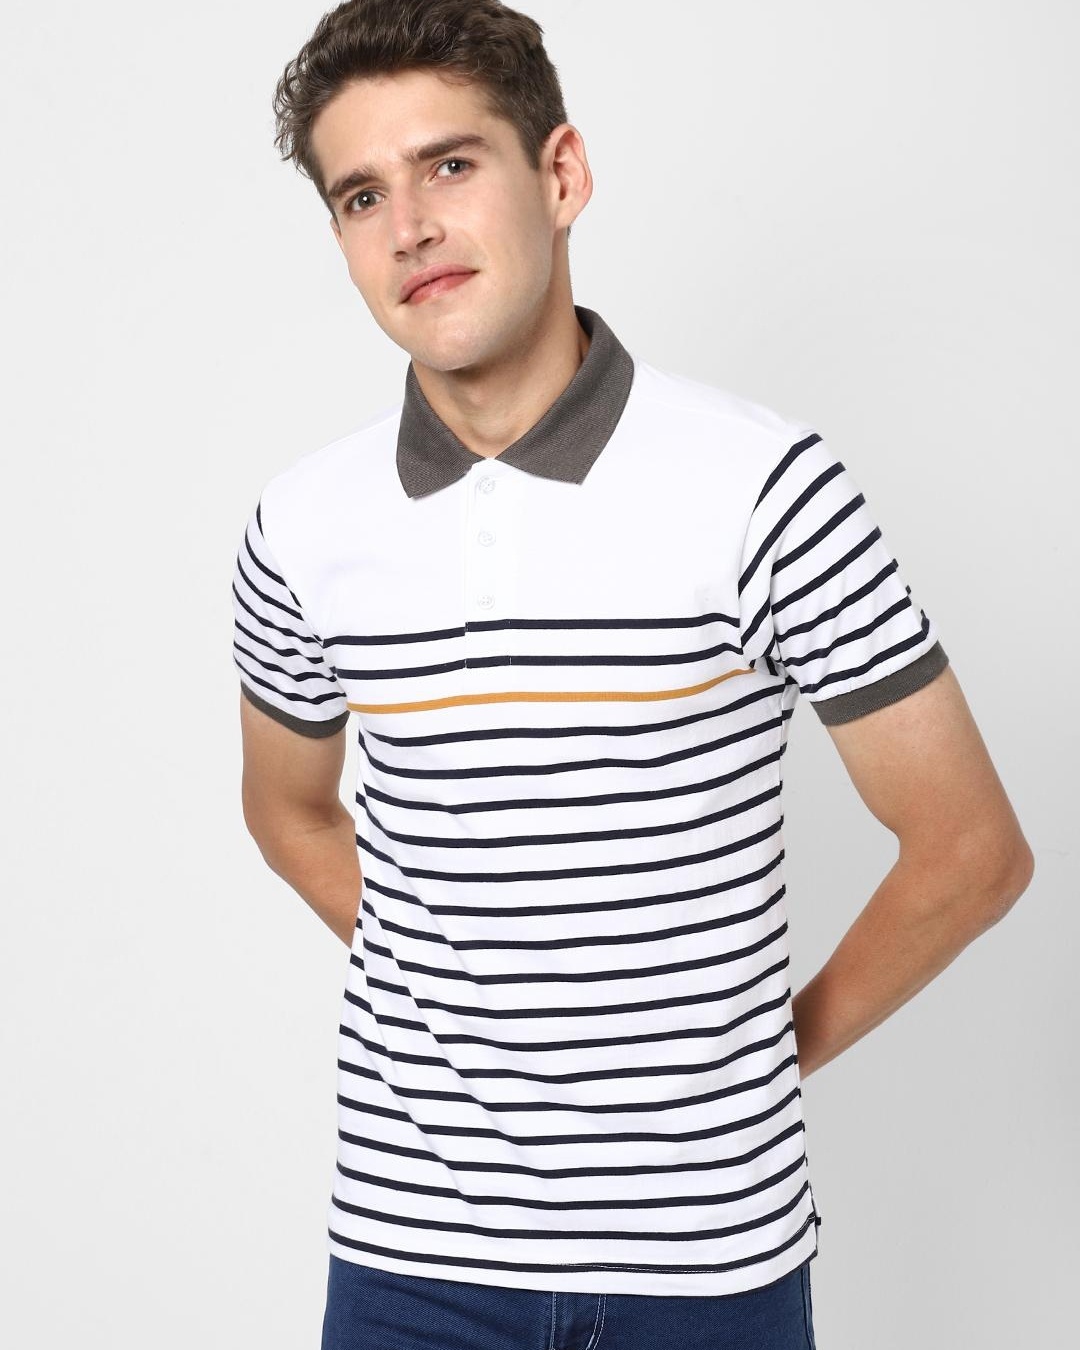 Buy Men's White Striped Polo T-shirt Online at Bewakoof